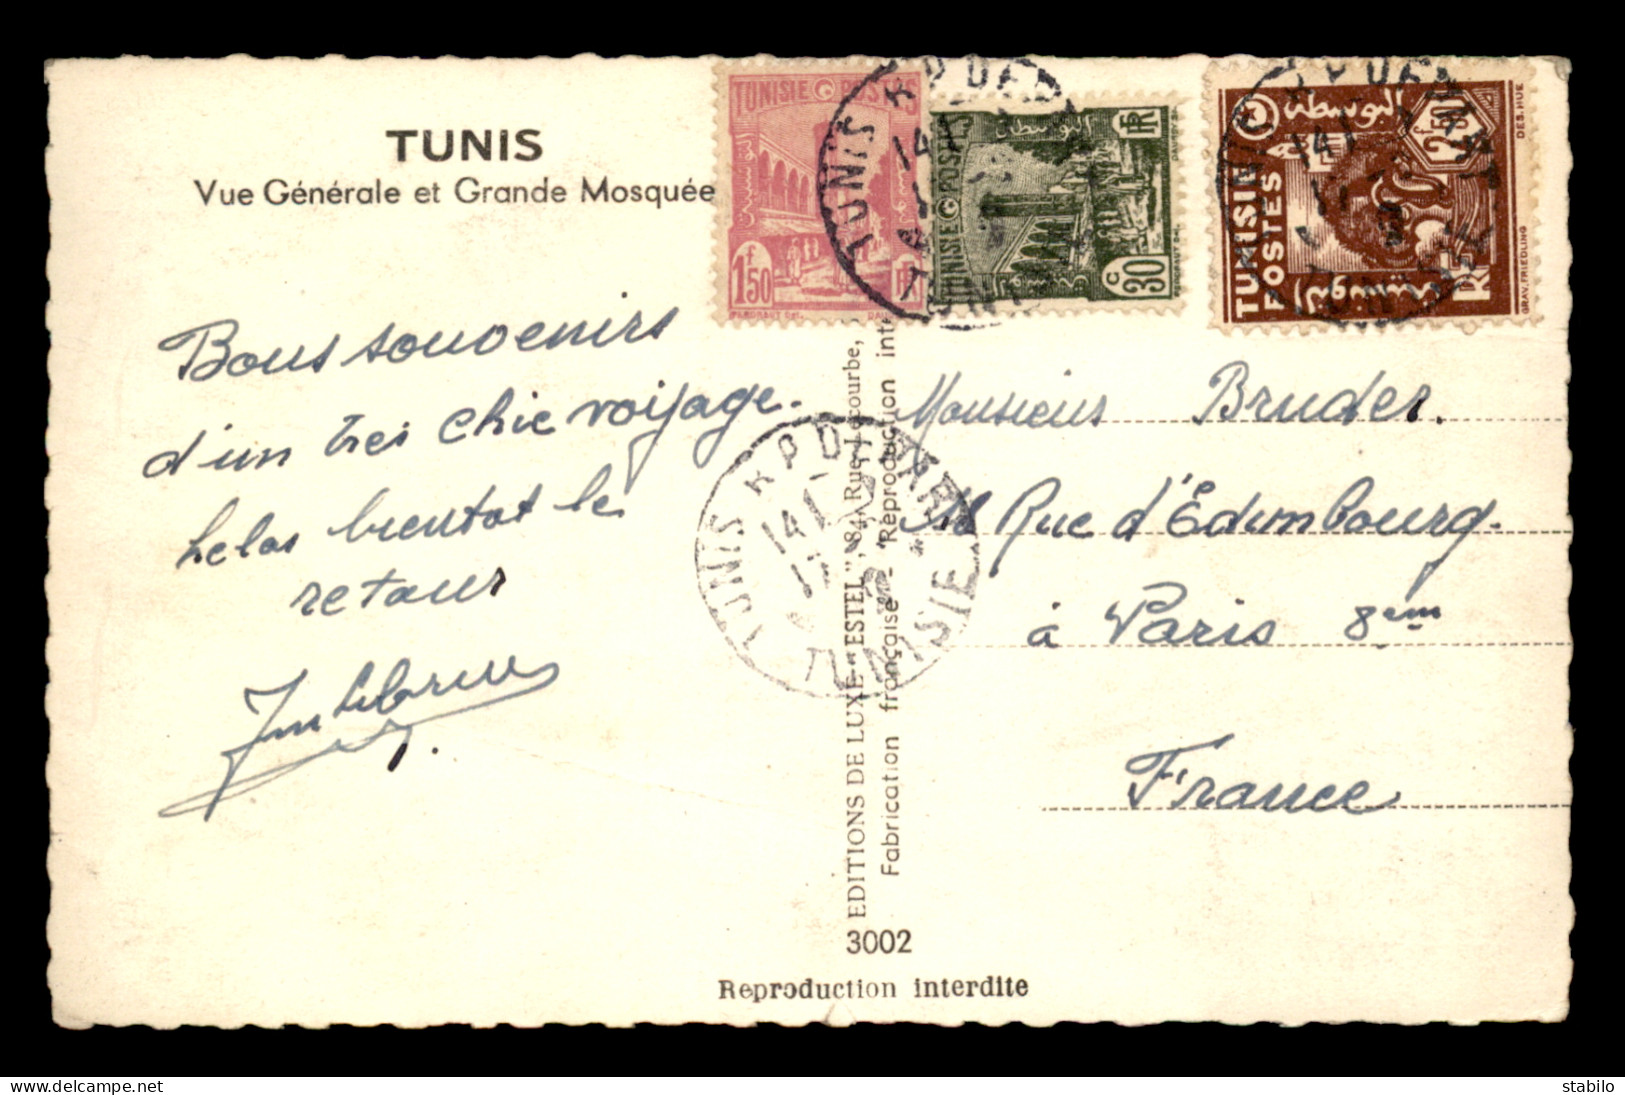 TUNISIE - AFFANCHISSEMENT MIXTE SUR CARTE POSTALE DE TUNIS - Tunisia (1956-...)